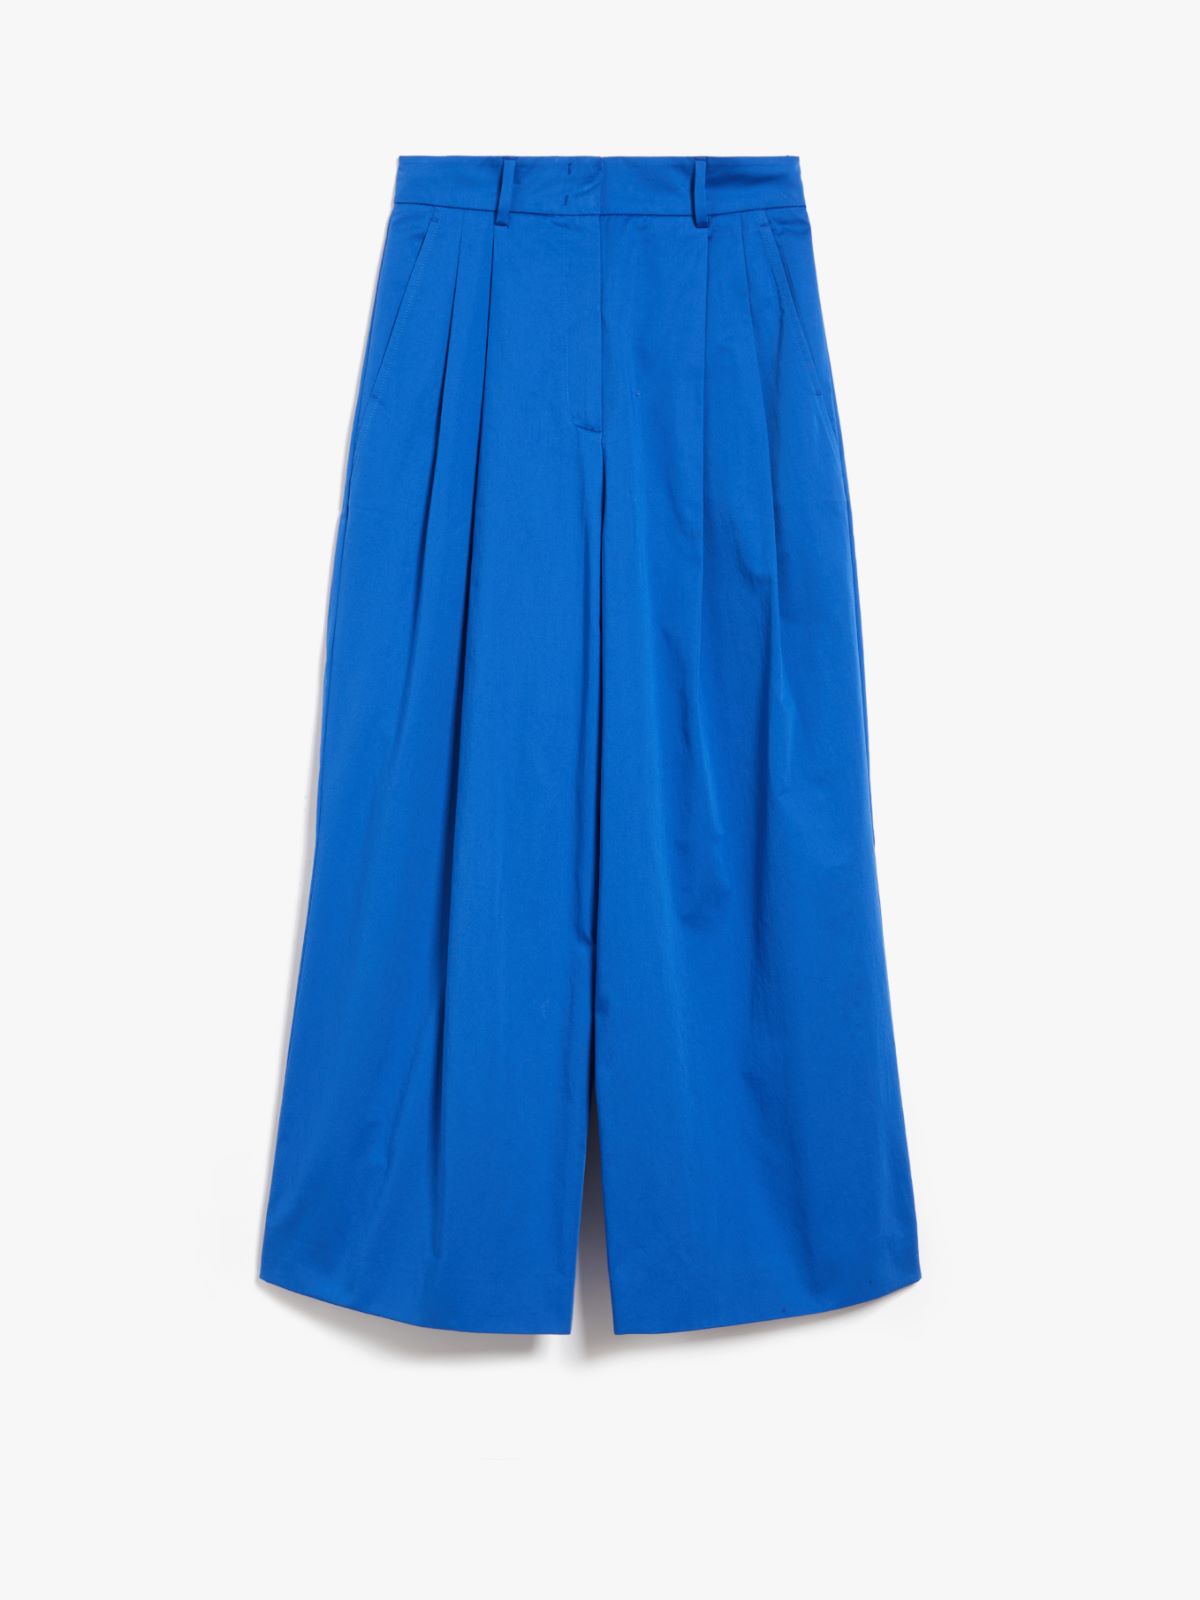 Trousers in cotton satin - CORNFLOWER BLUE - Weekend Max Mara - 5